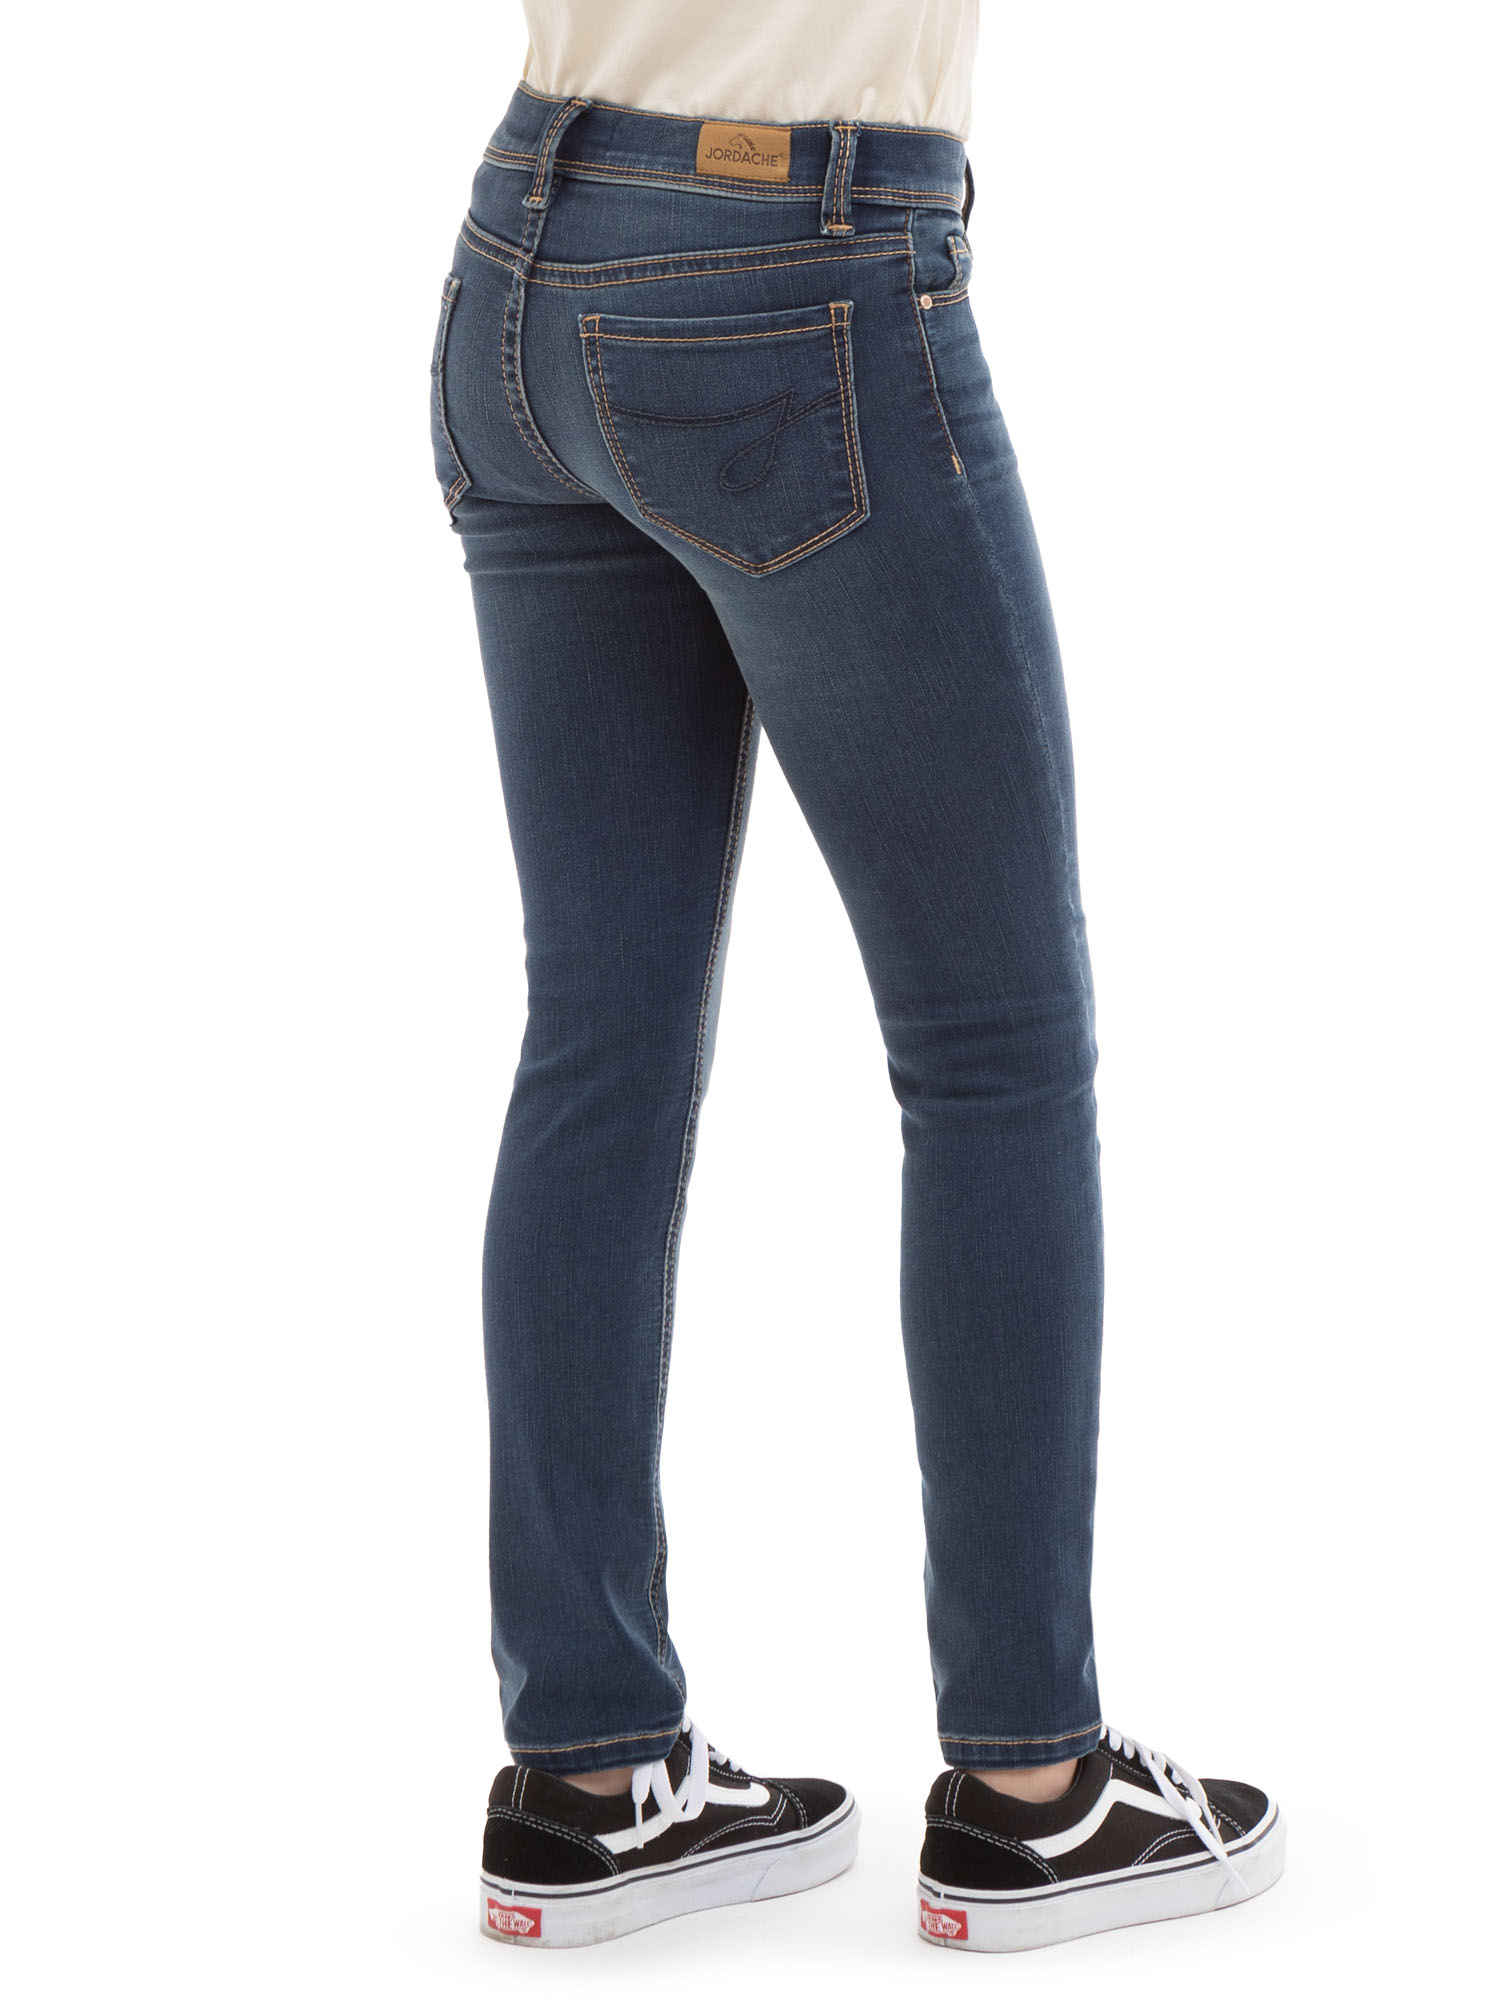 Jordache Girls Skinny Jeans, Sizes 5-18 - image 4 of 5